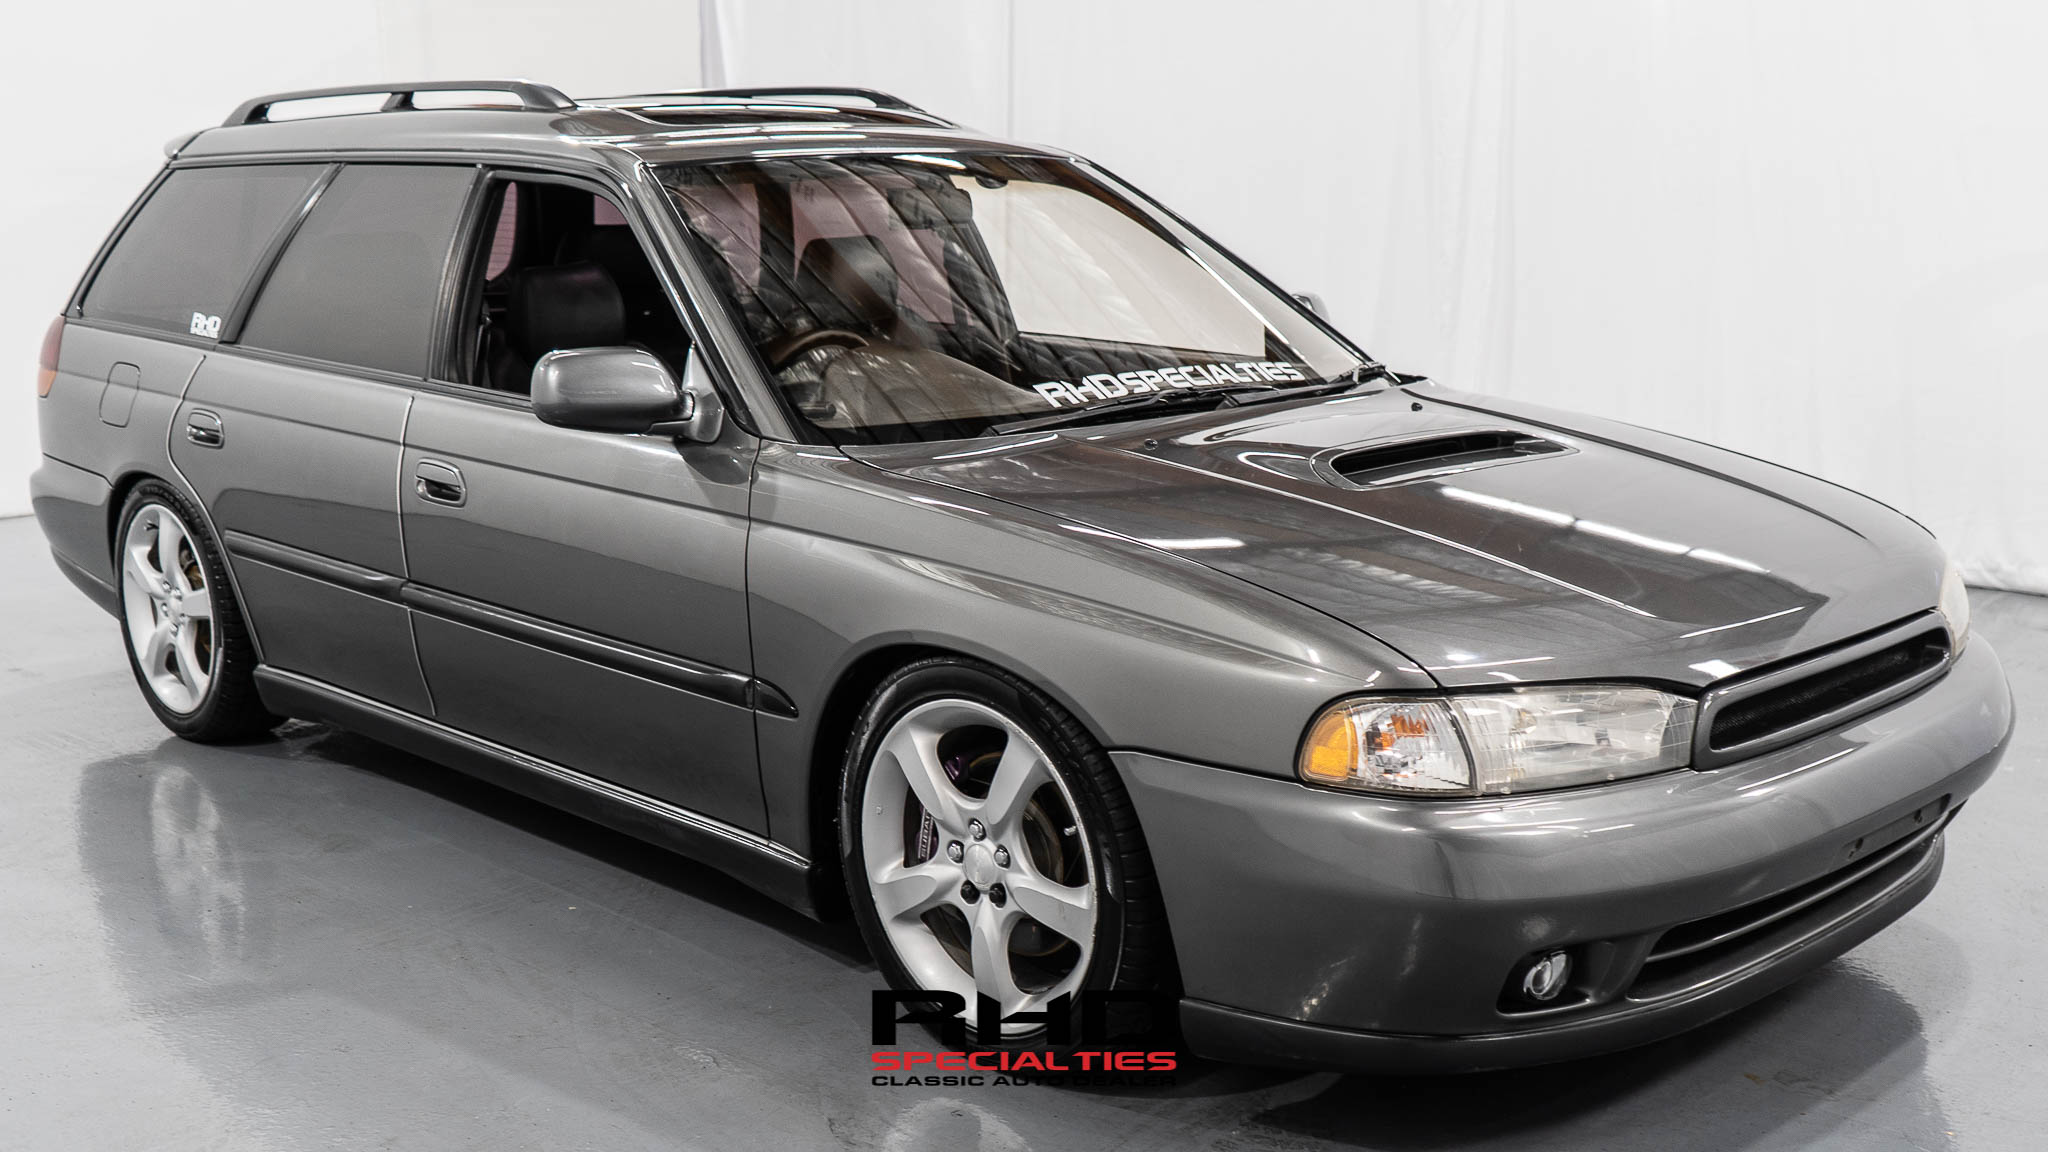 1994 Subaru Legacy Gt Sold Rhd Specialties Llc